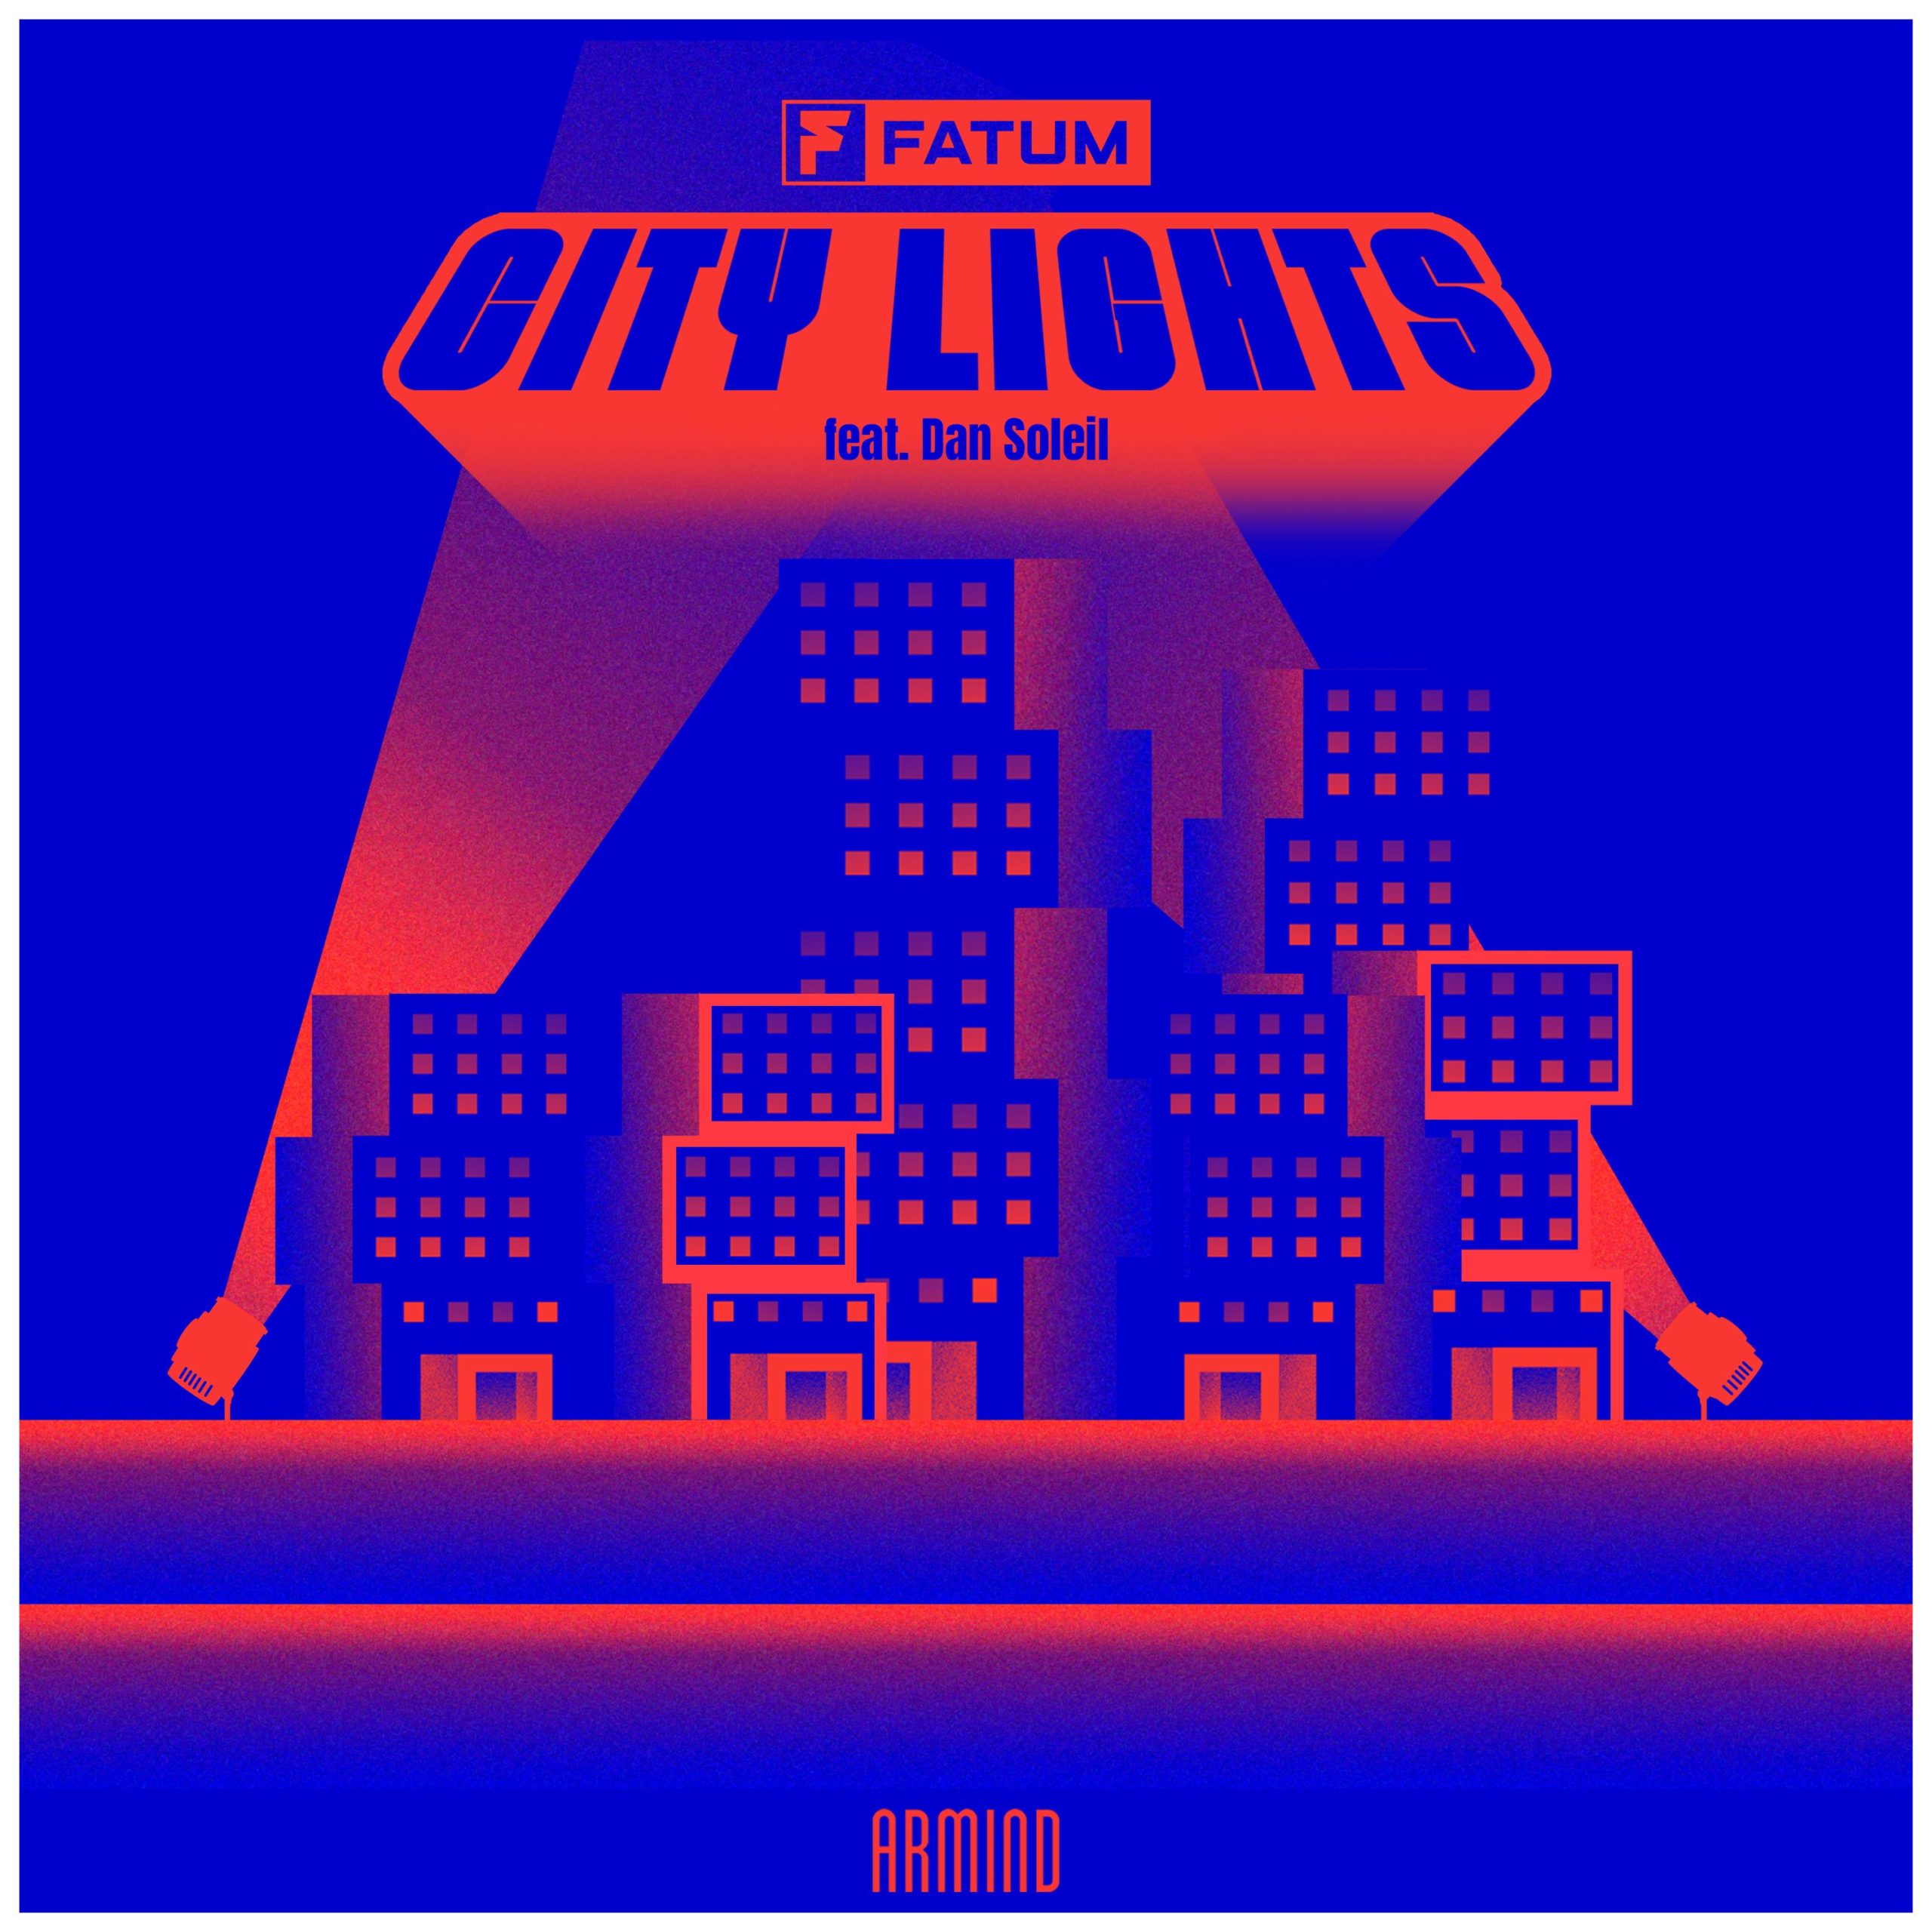 Fatum feat. Dan Soleil presents City Lights on Armind